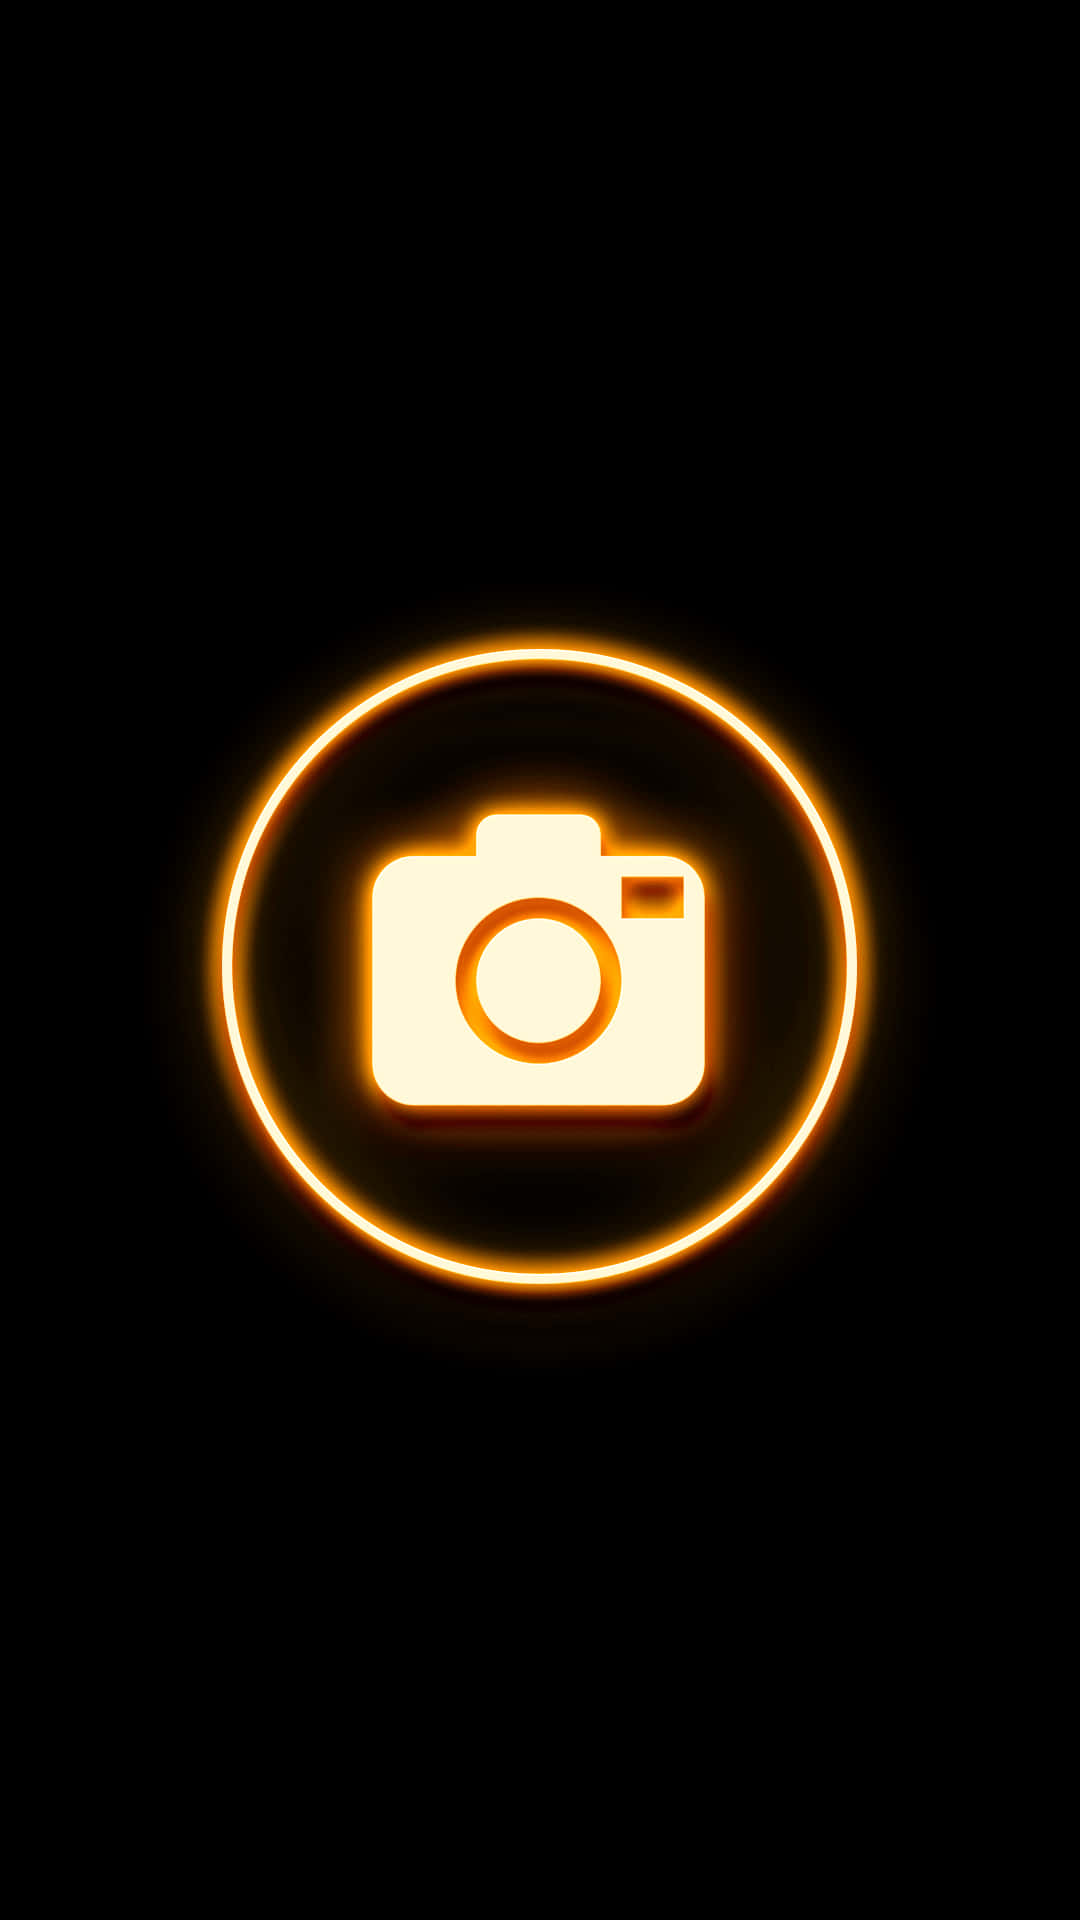 Fotocamerainstagram In Neon Arancione Su Sfondo Nero.